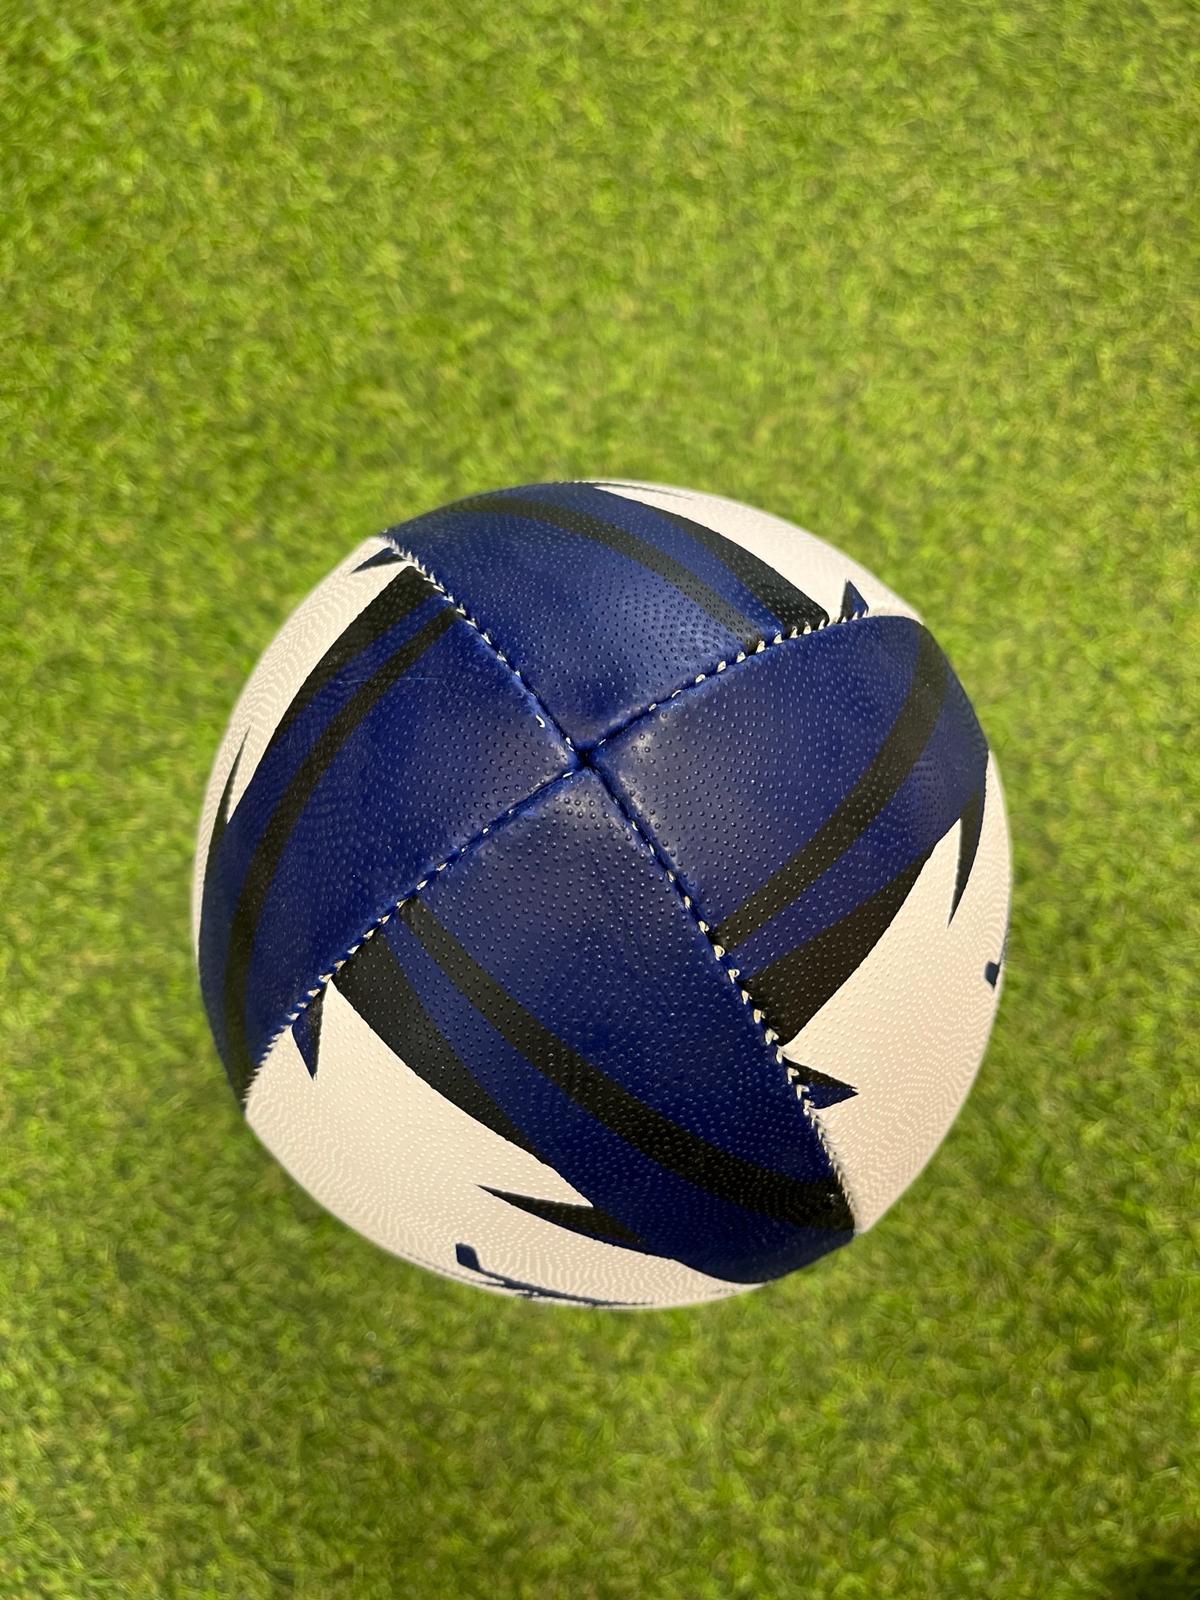 EggChaser Sevens Rugby Trainer Ball - Size 3,4,5